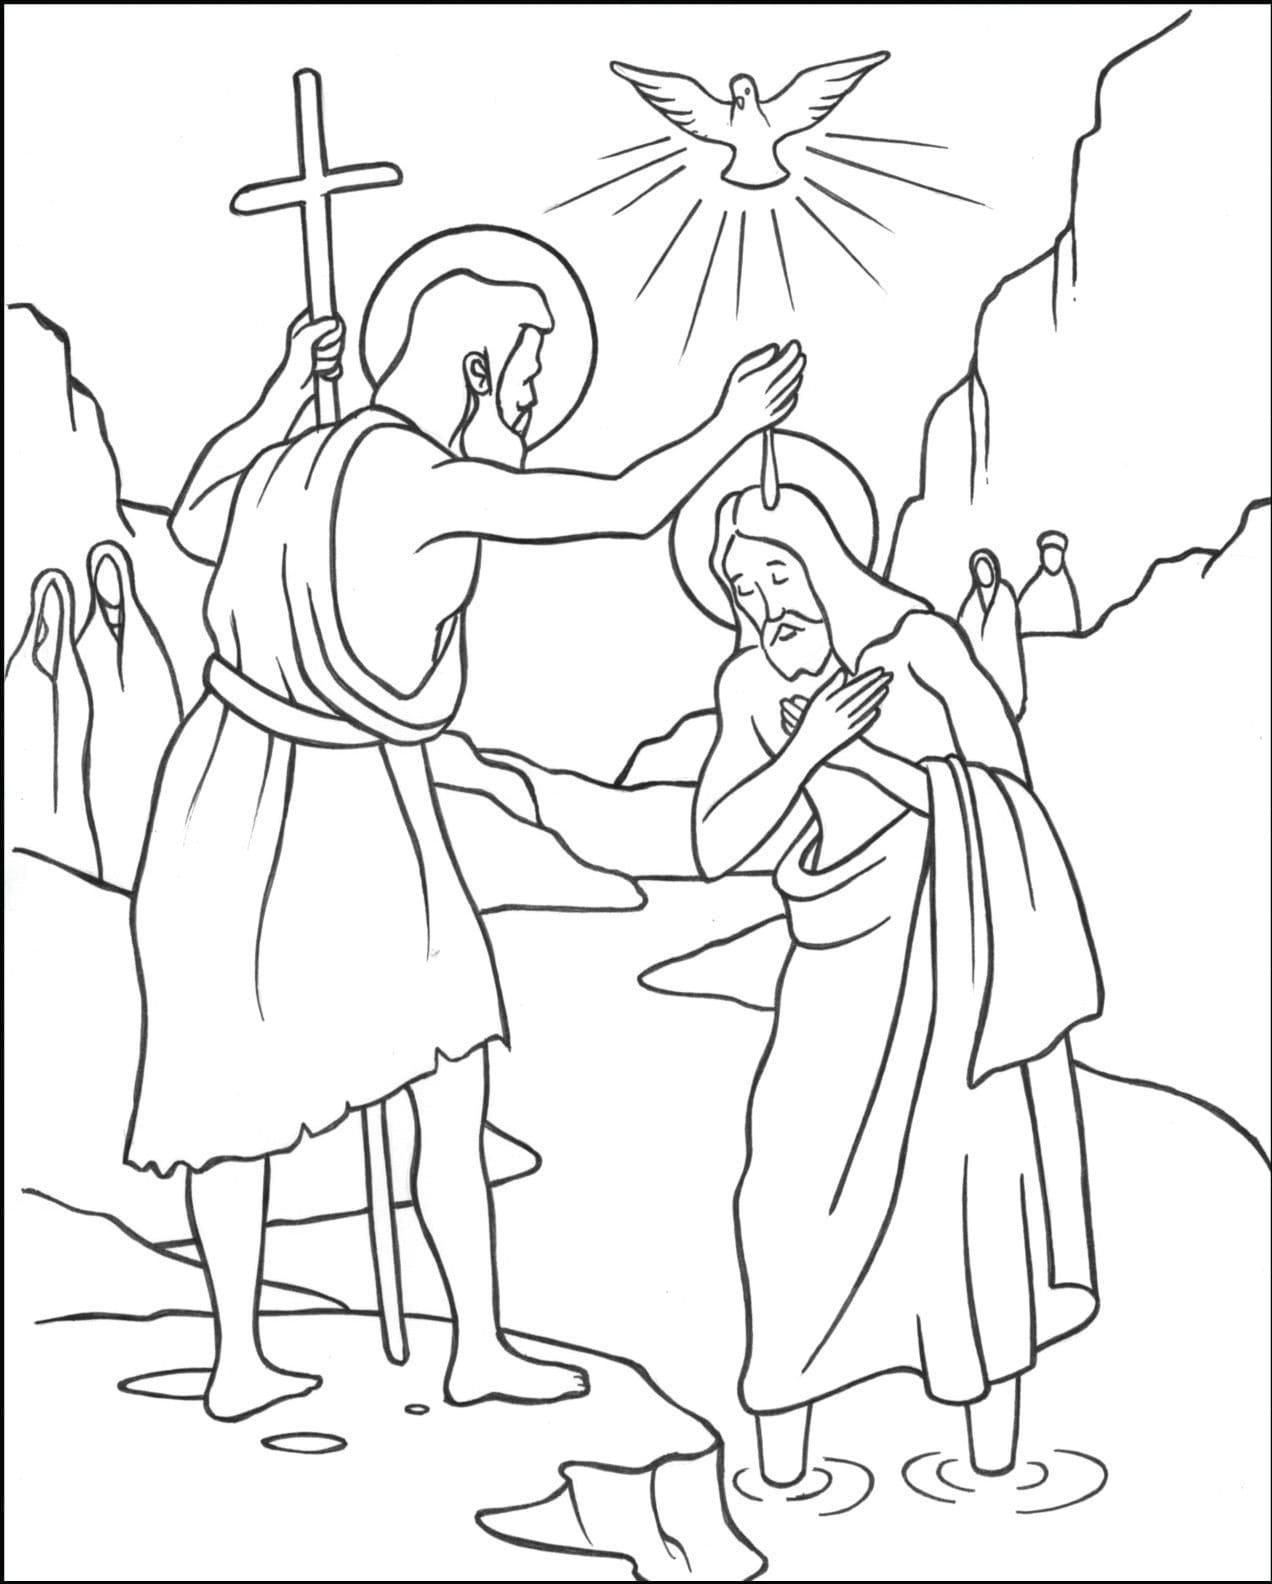 Baptism of jesus christ #8